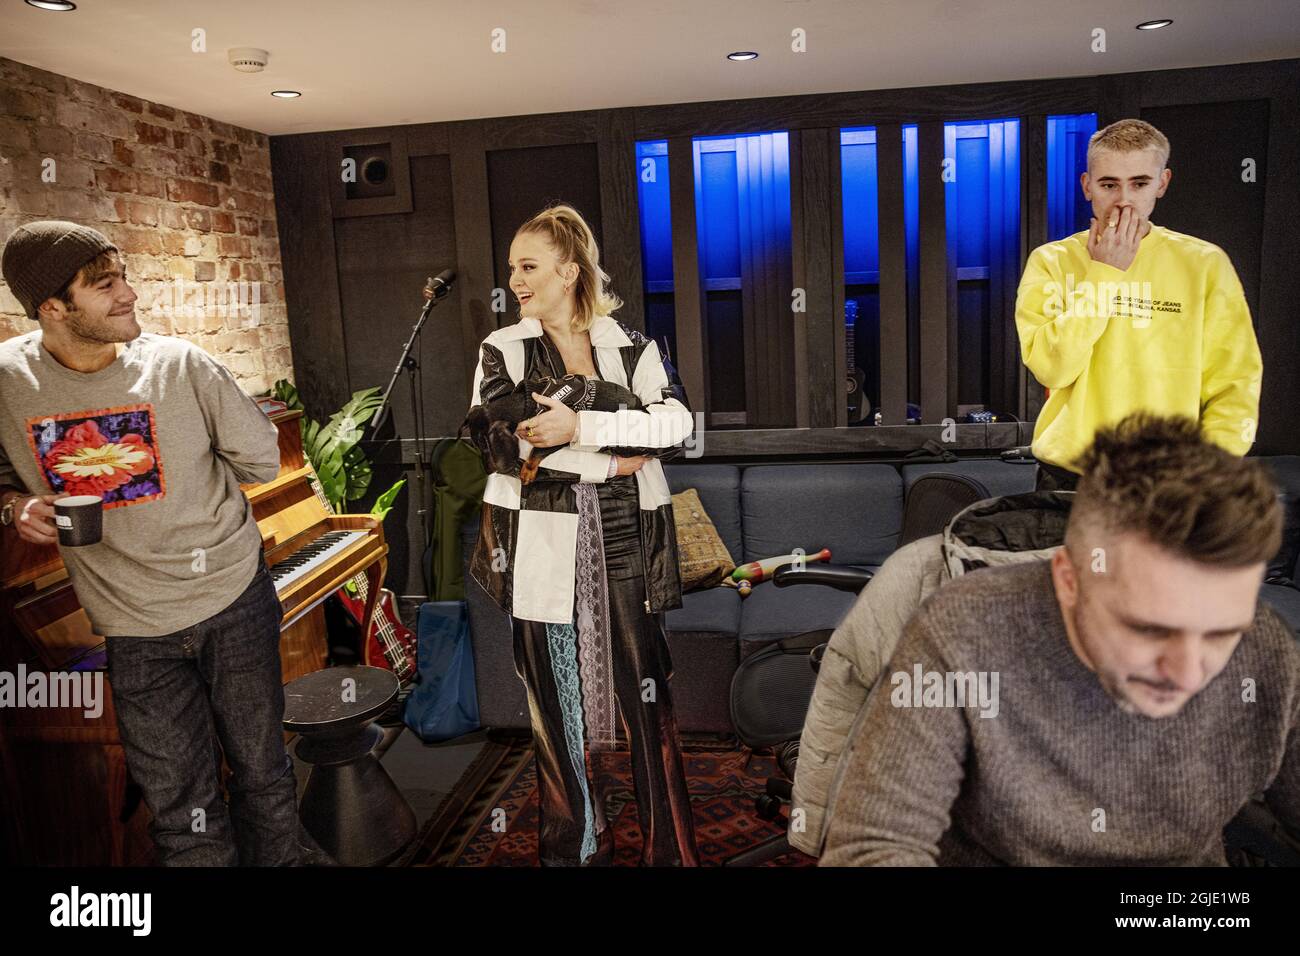 Zara Larsson is photographed in Stockholm, Sweden, on February 09, 2021,  during a hectic PR day. Zara with Benjamin Ingrosso, Felix Sandman och  Robert Habolin in the studio. Zara Larsson has released